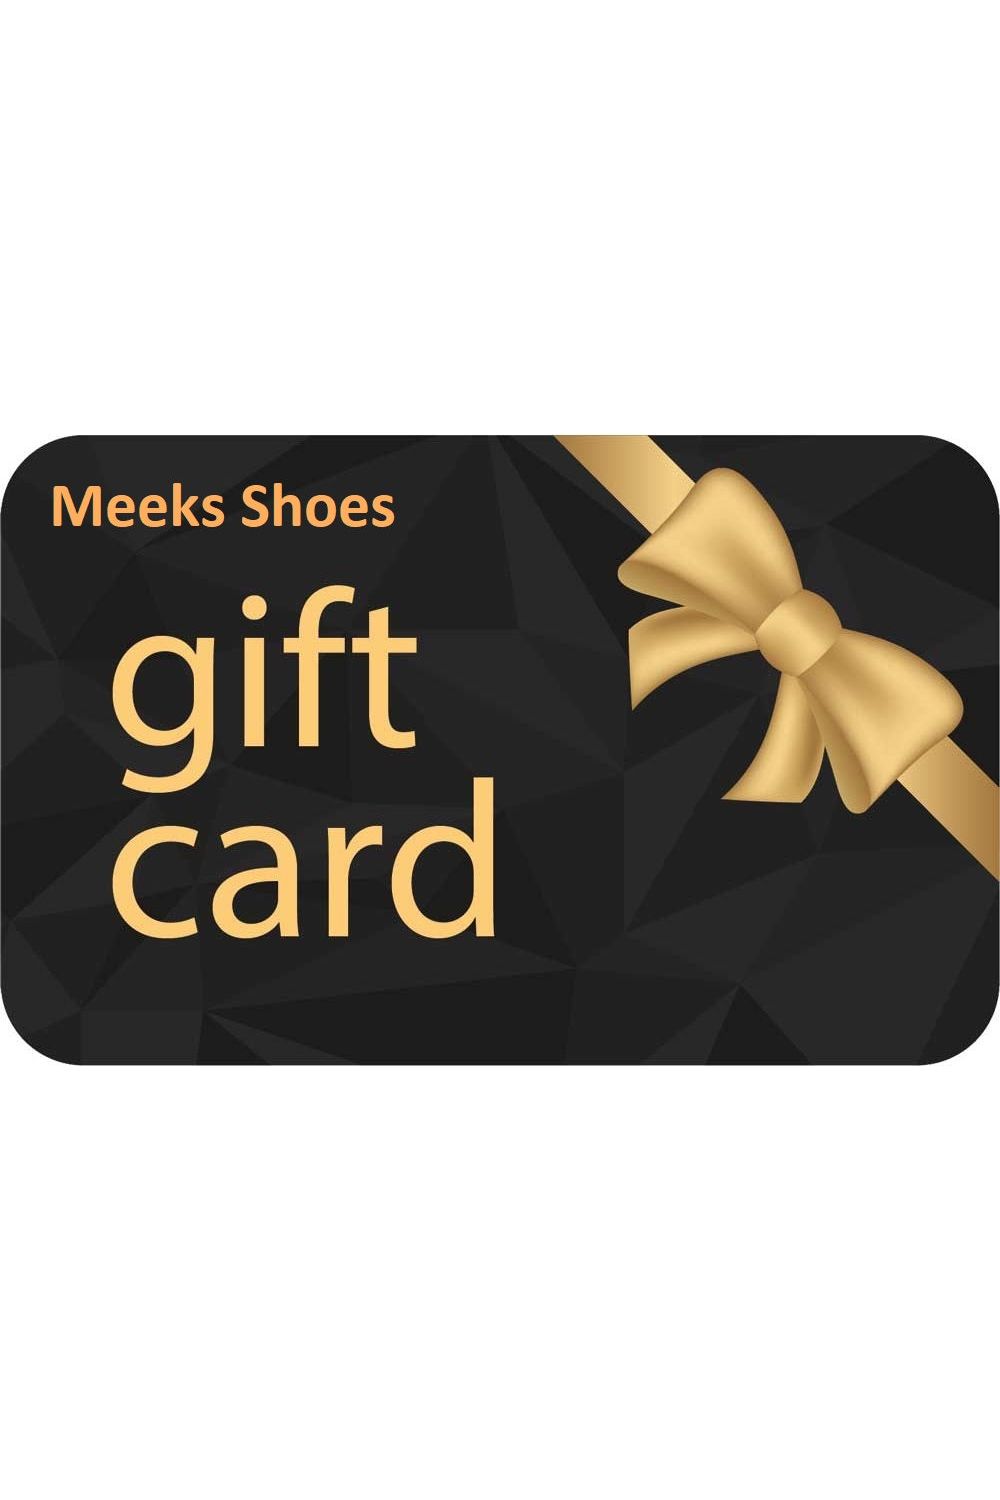 Meeks Shoes e-Gift Card